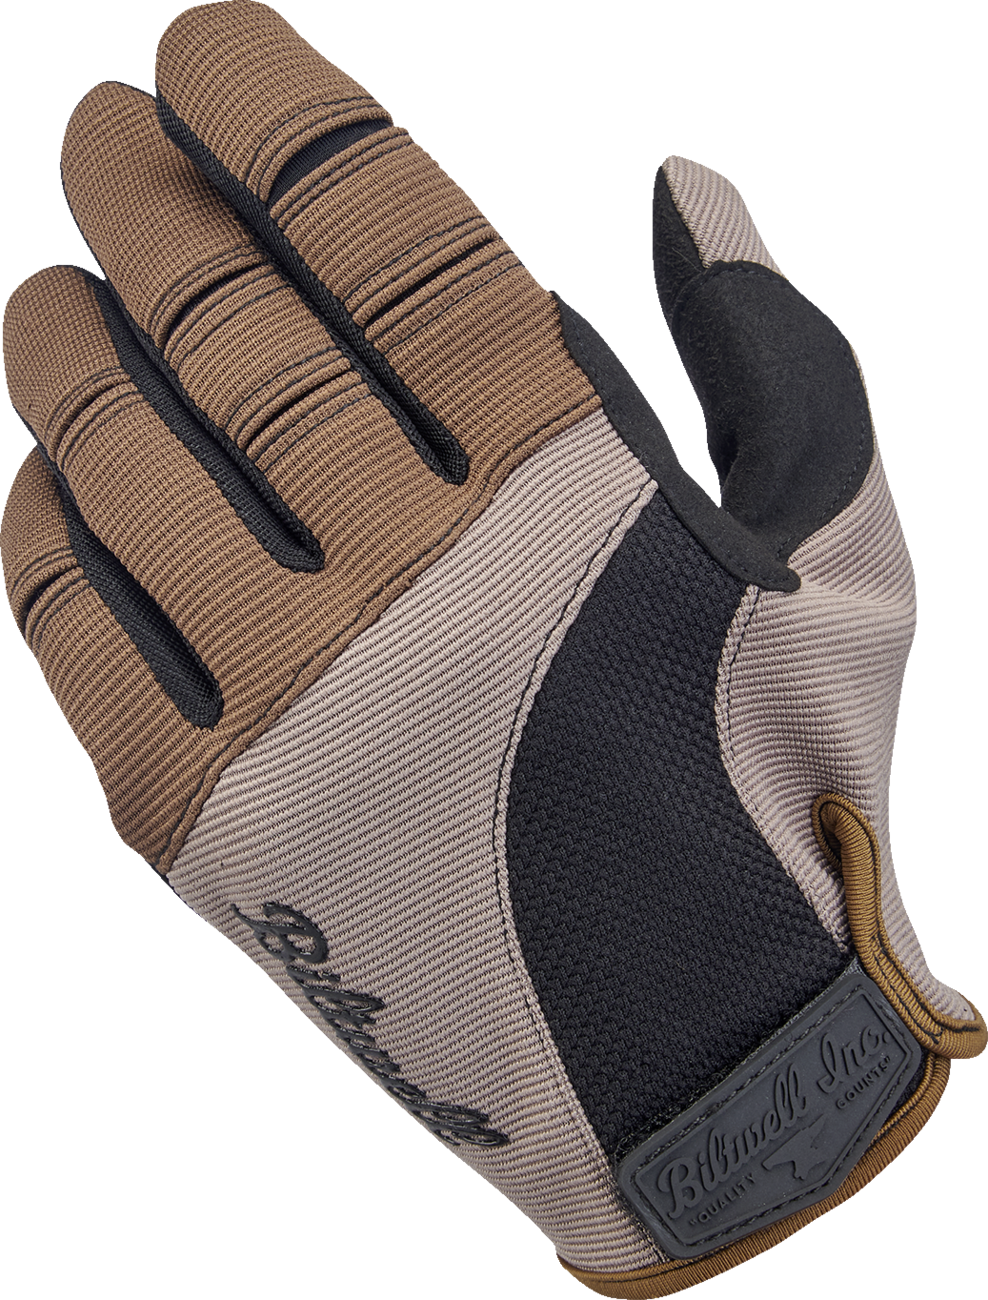 BILTWELL Moto Gloves - Coyote/Black - 2XL 1501-1301-006